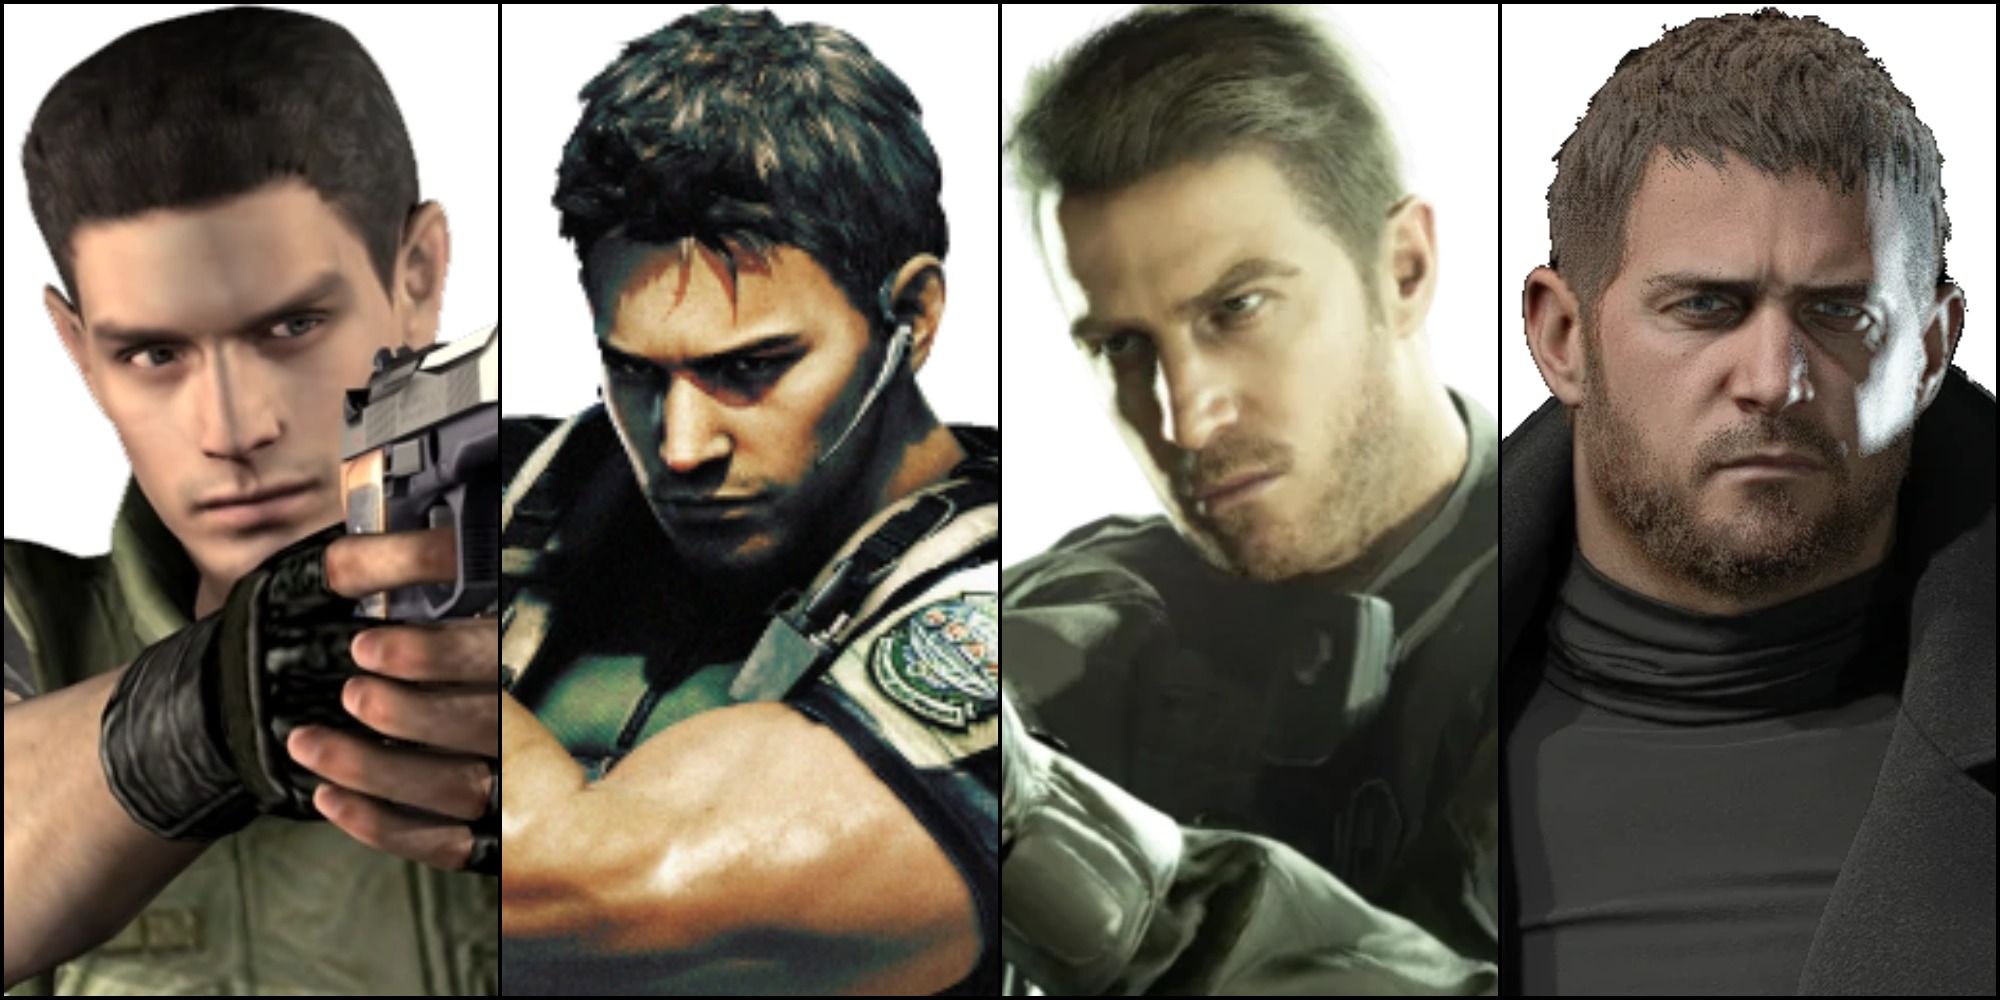 From left: Chris Redfield's face in Resident Evil 1, his face in RE5, his face in RE7, and his face in RE8